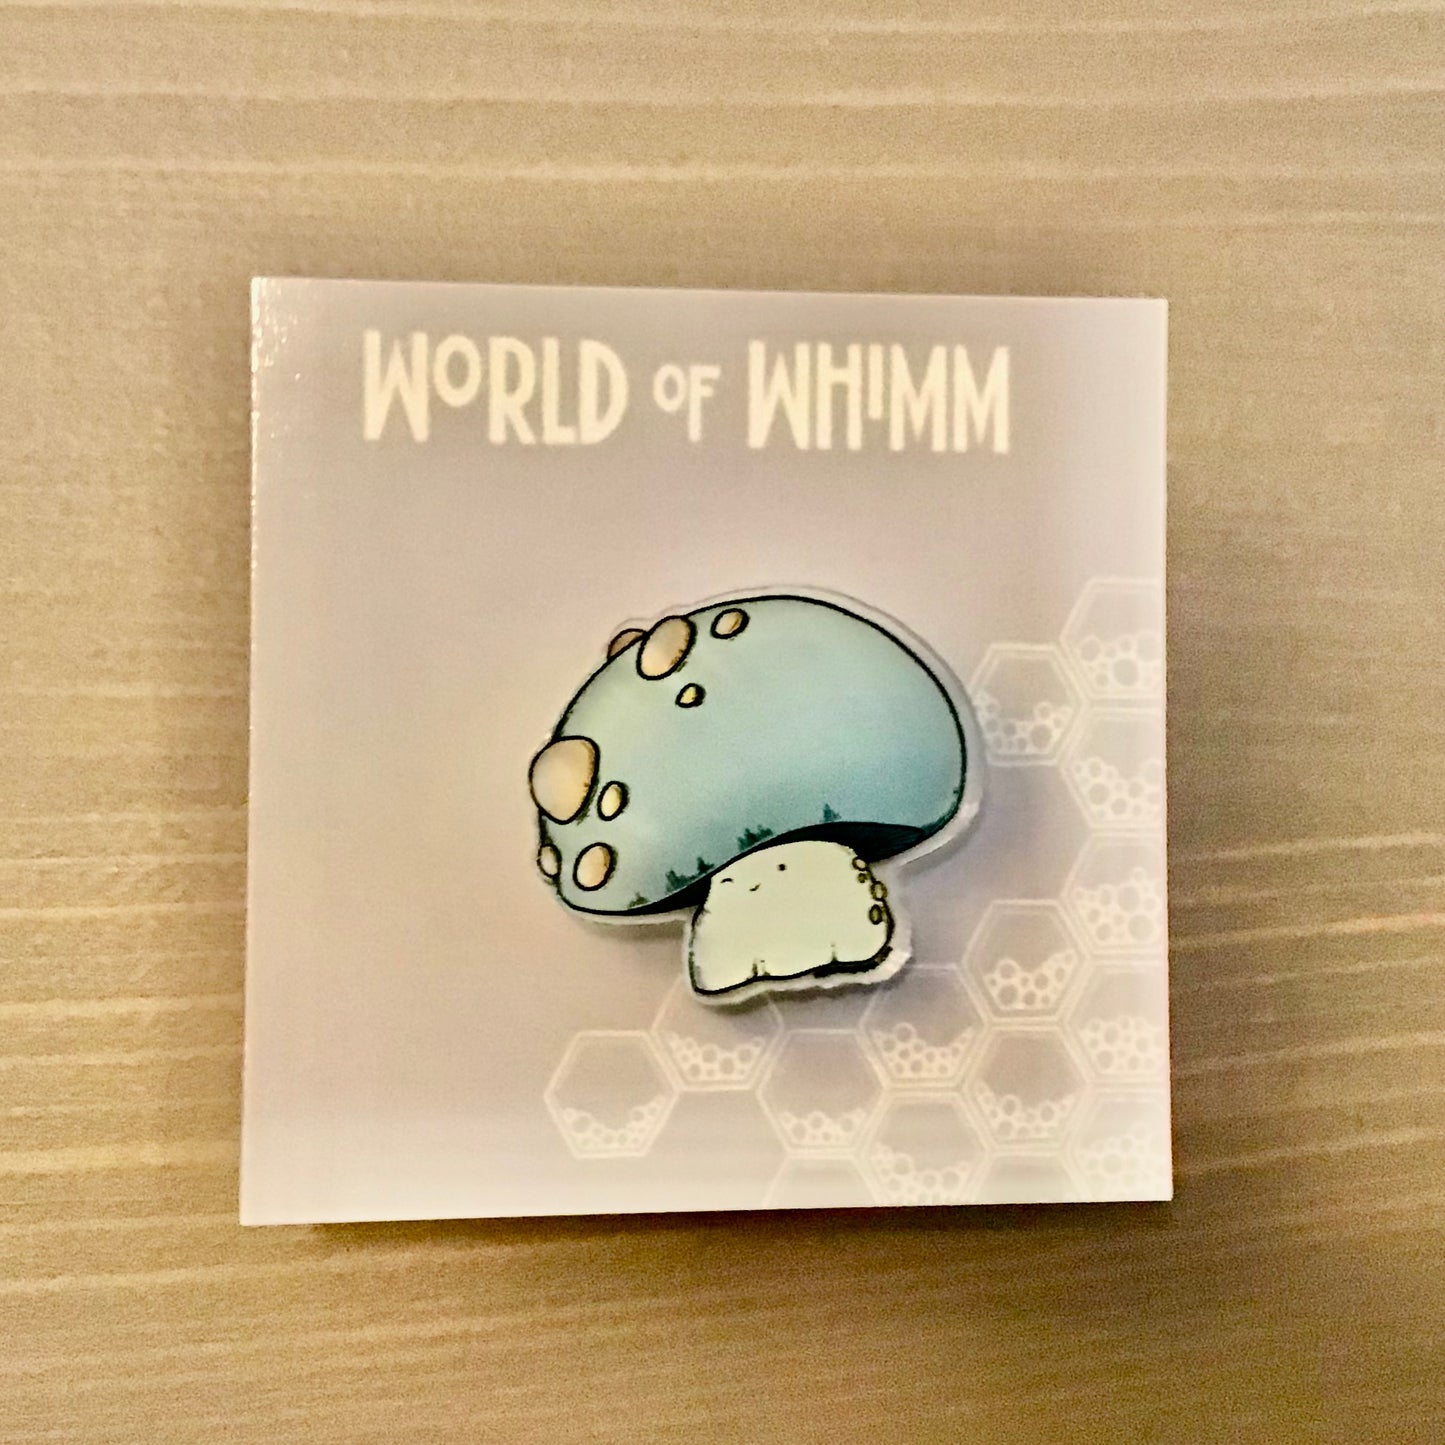 Acrylic Pin - Winking Mushroom